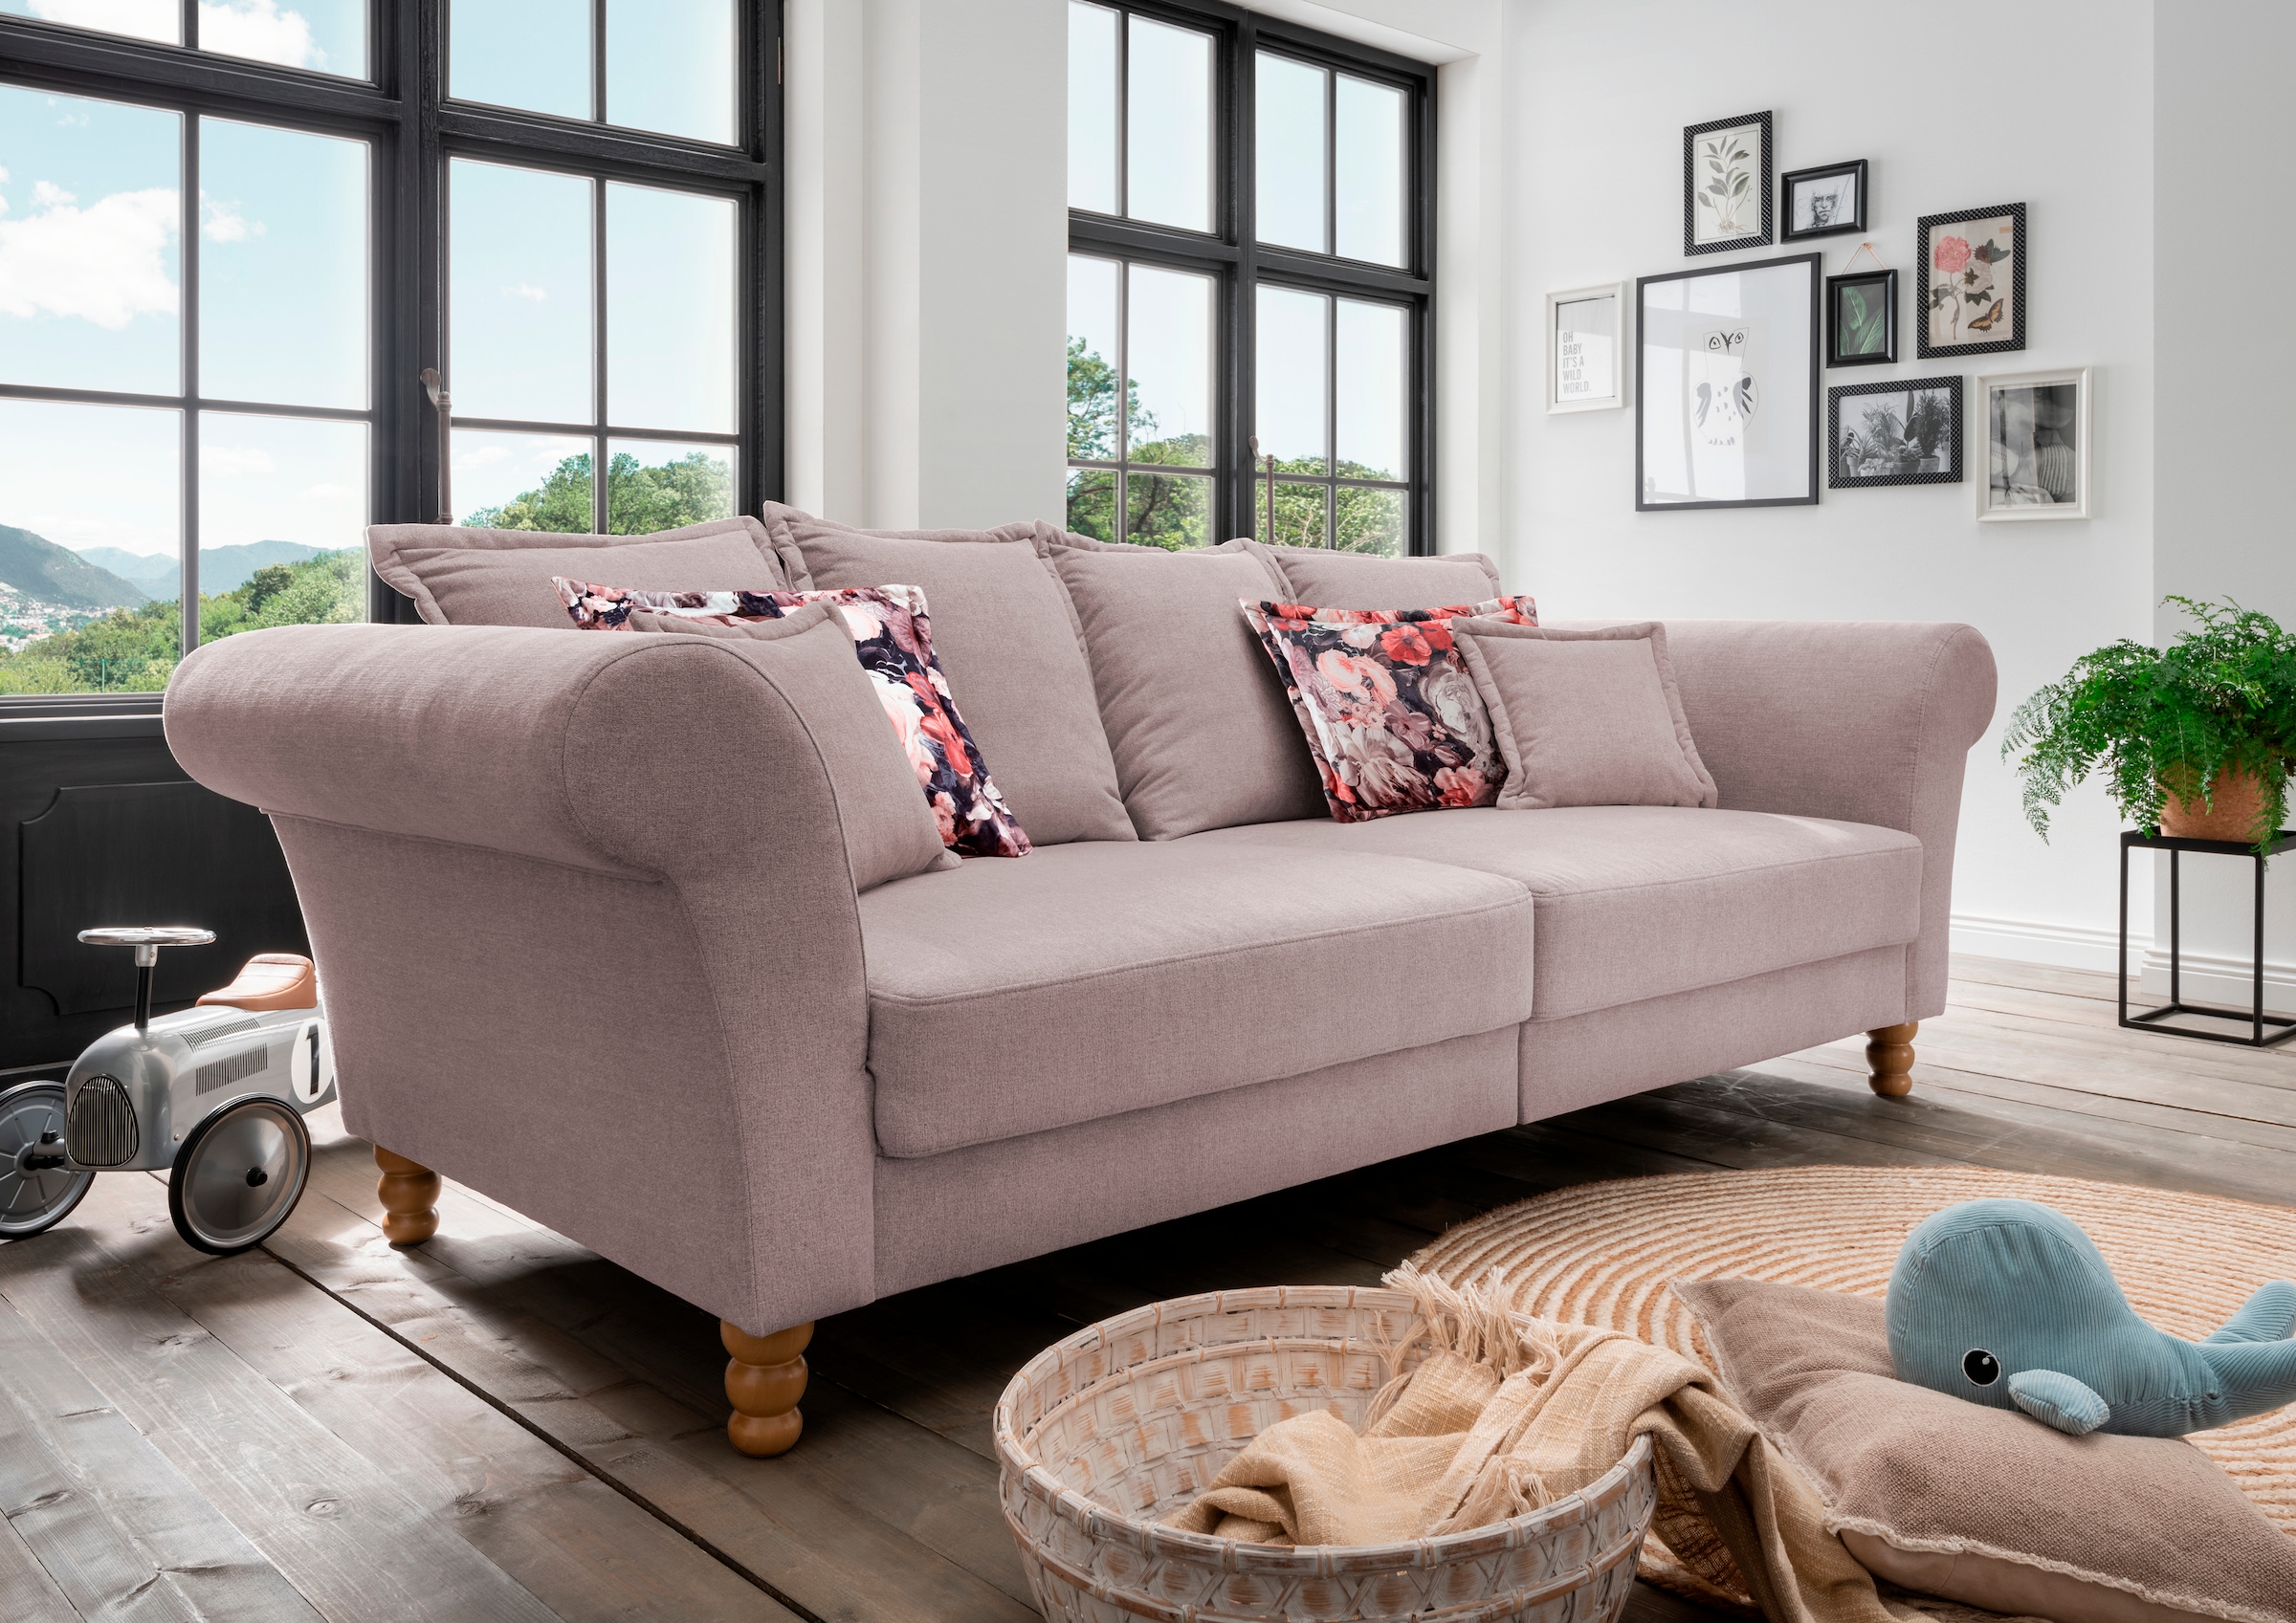 Big-Sofa kaufen bei affaire OTTO Home »Tassilo«